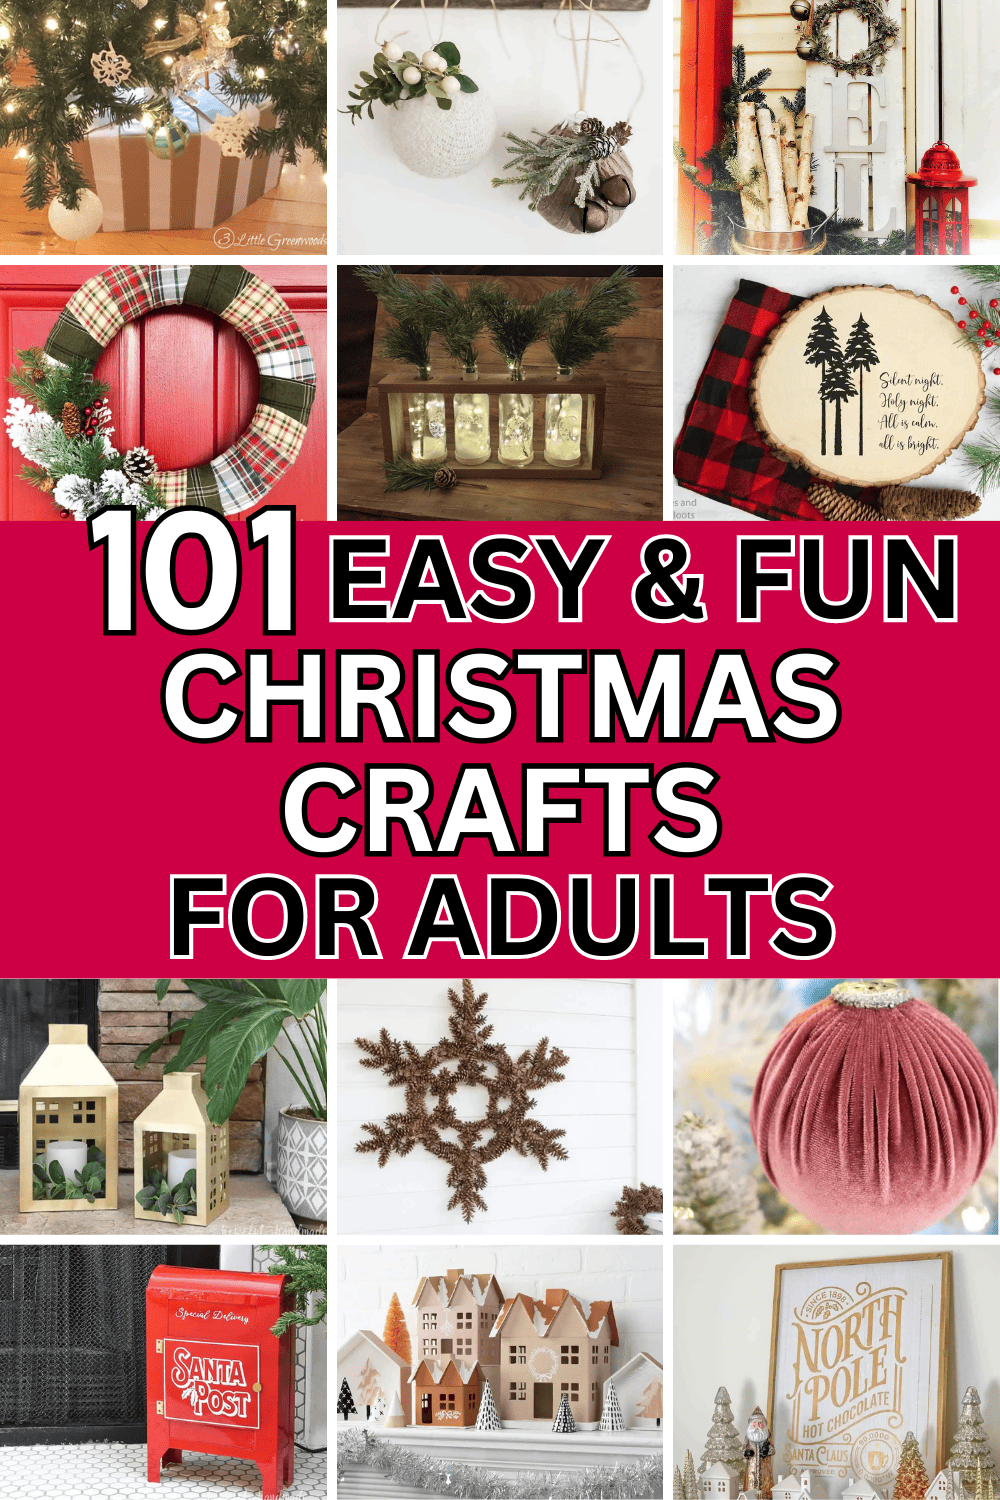 15 Amazing Creative Christmas Gift Exchange Ideas  A Visual Merriment:  Kids Crafts, Adult DIYs, Parties, Planning + Home Decor